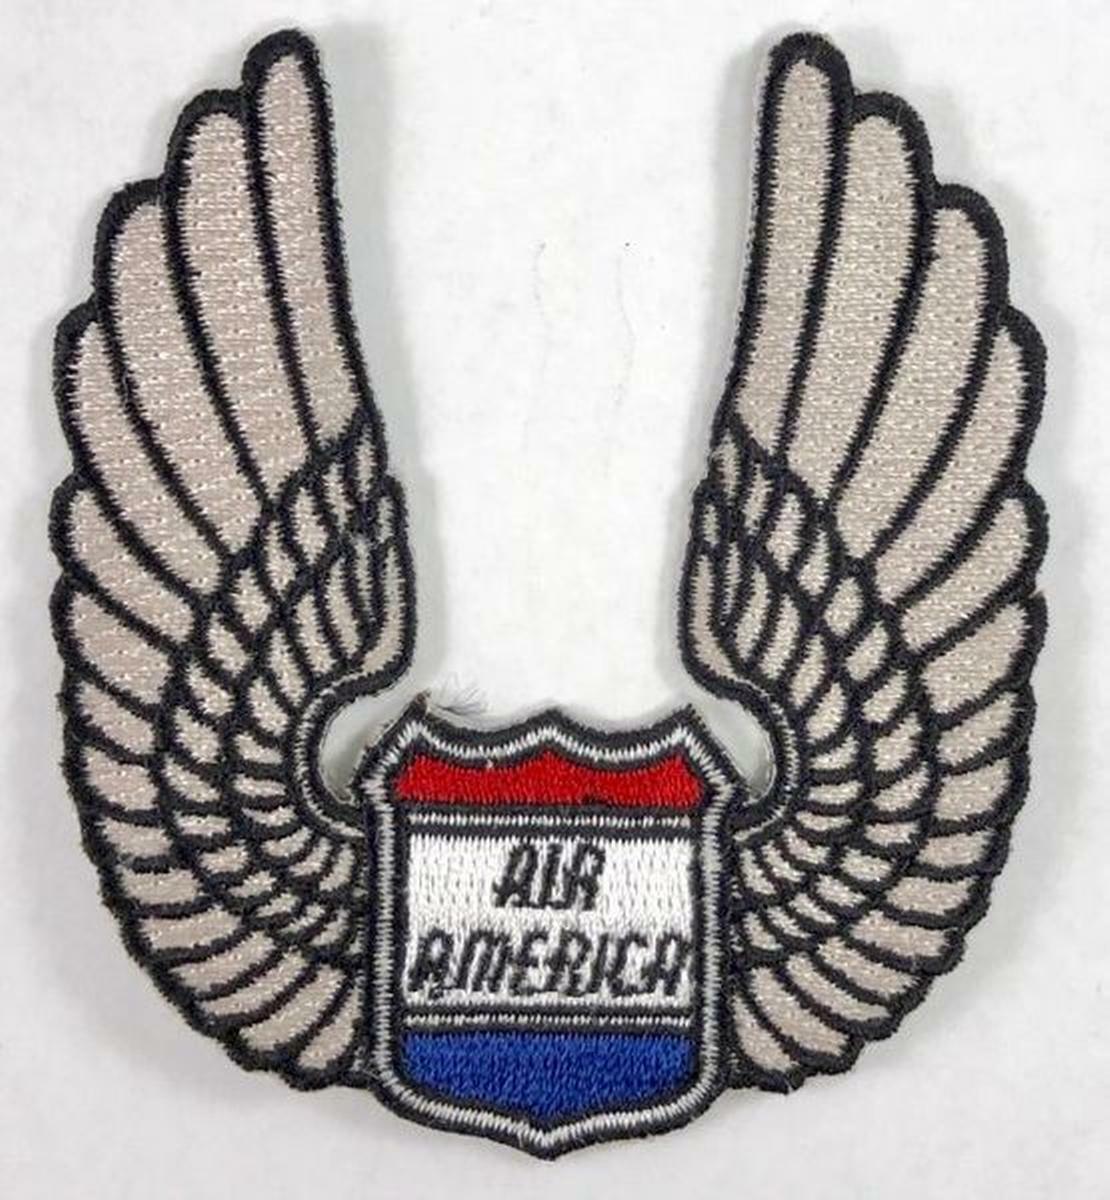 Air America Embroidered Patch, Vietnam War, Laos, AviationVintage Plane PAT-0124